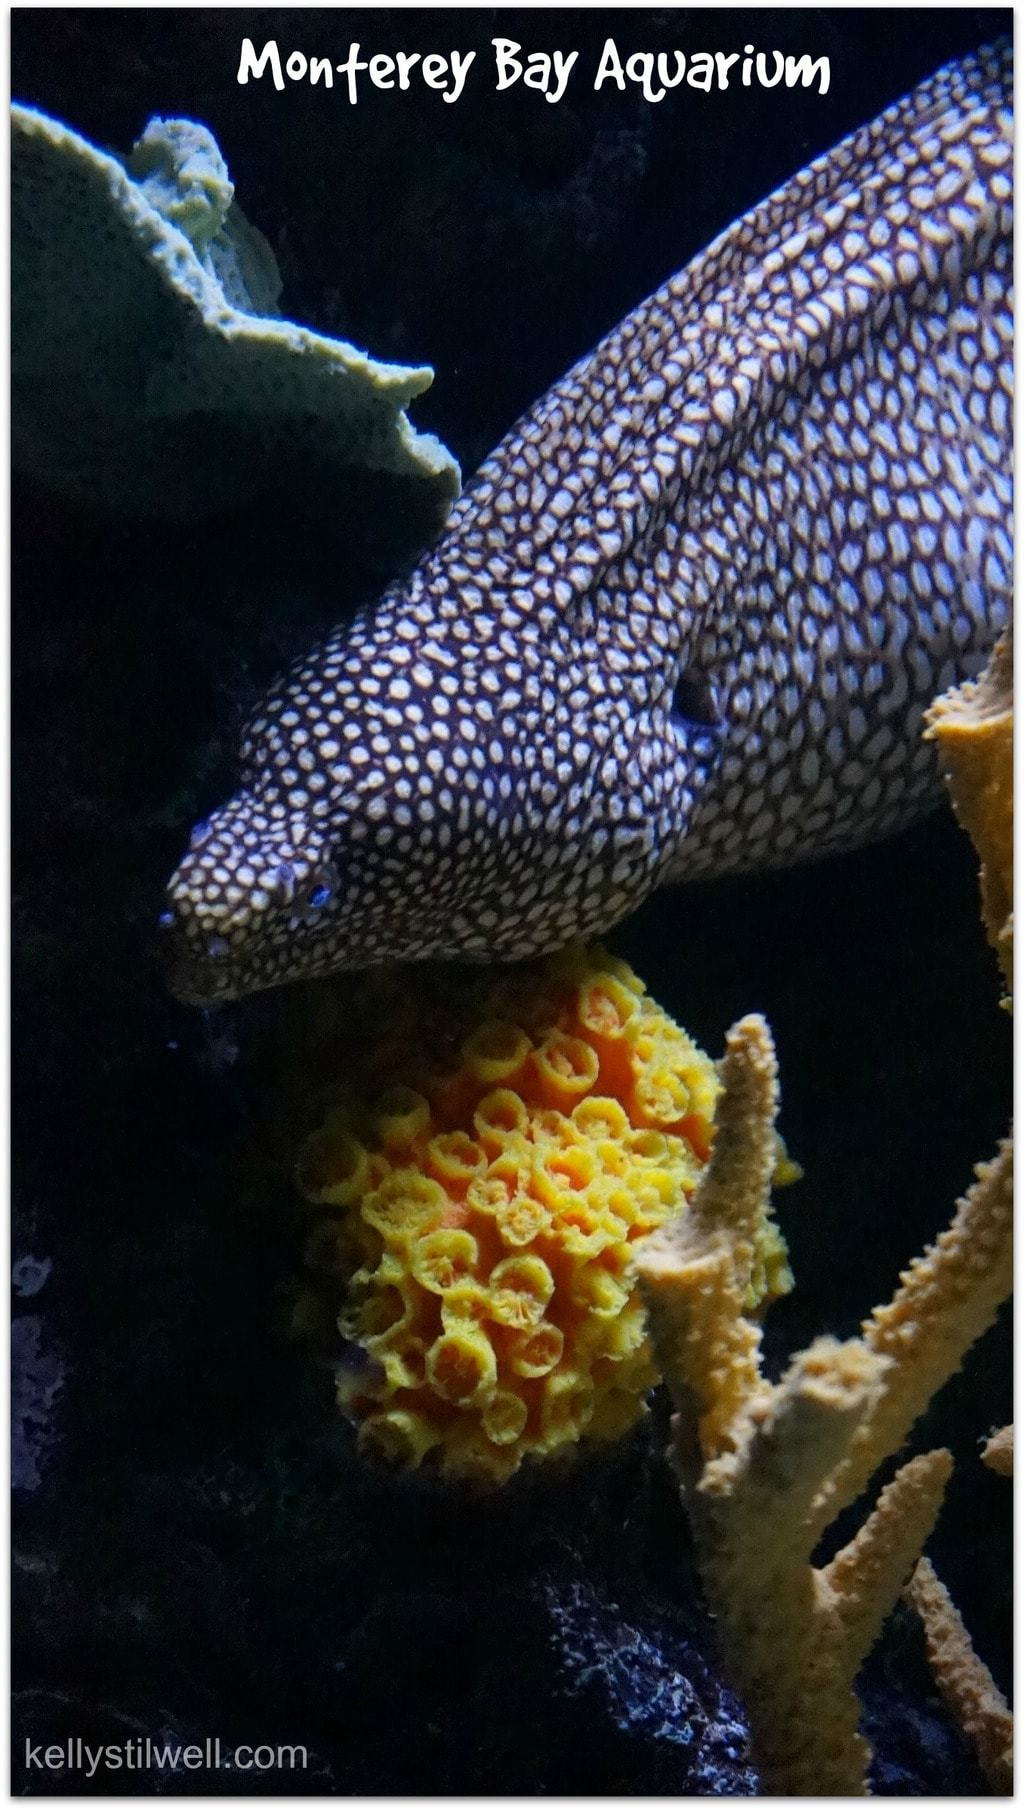 10 Reasons to Visit Monterey Bay Aquarium